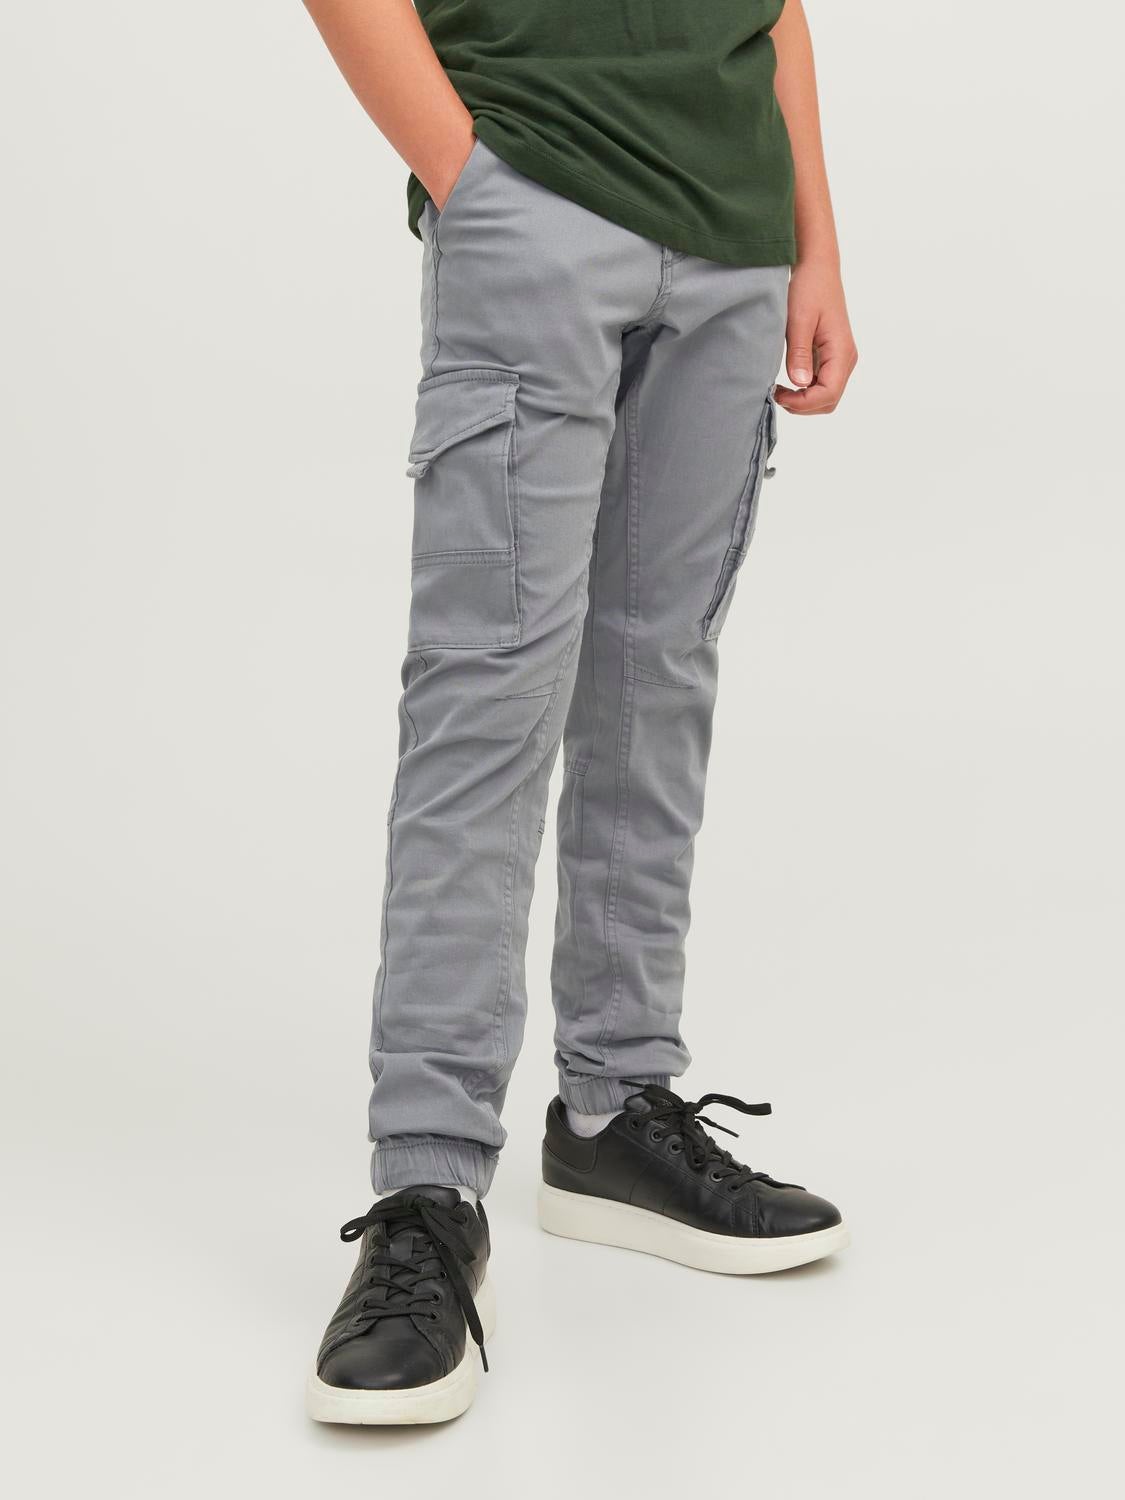 Buy Olive Green Trousers  Pants for Men by Produkt By Jack  Jones Online   Ajiocom